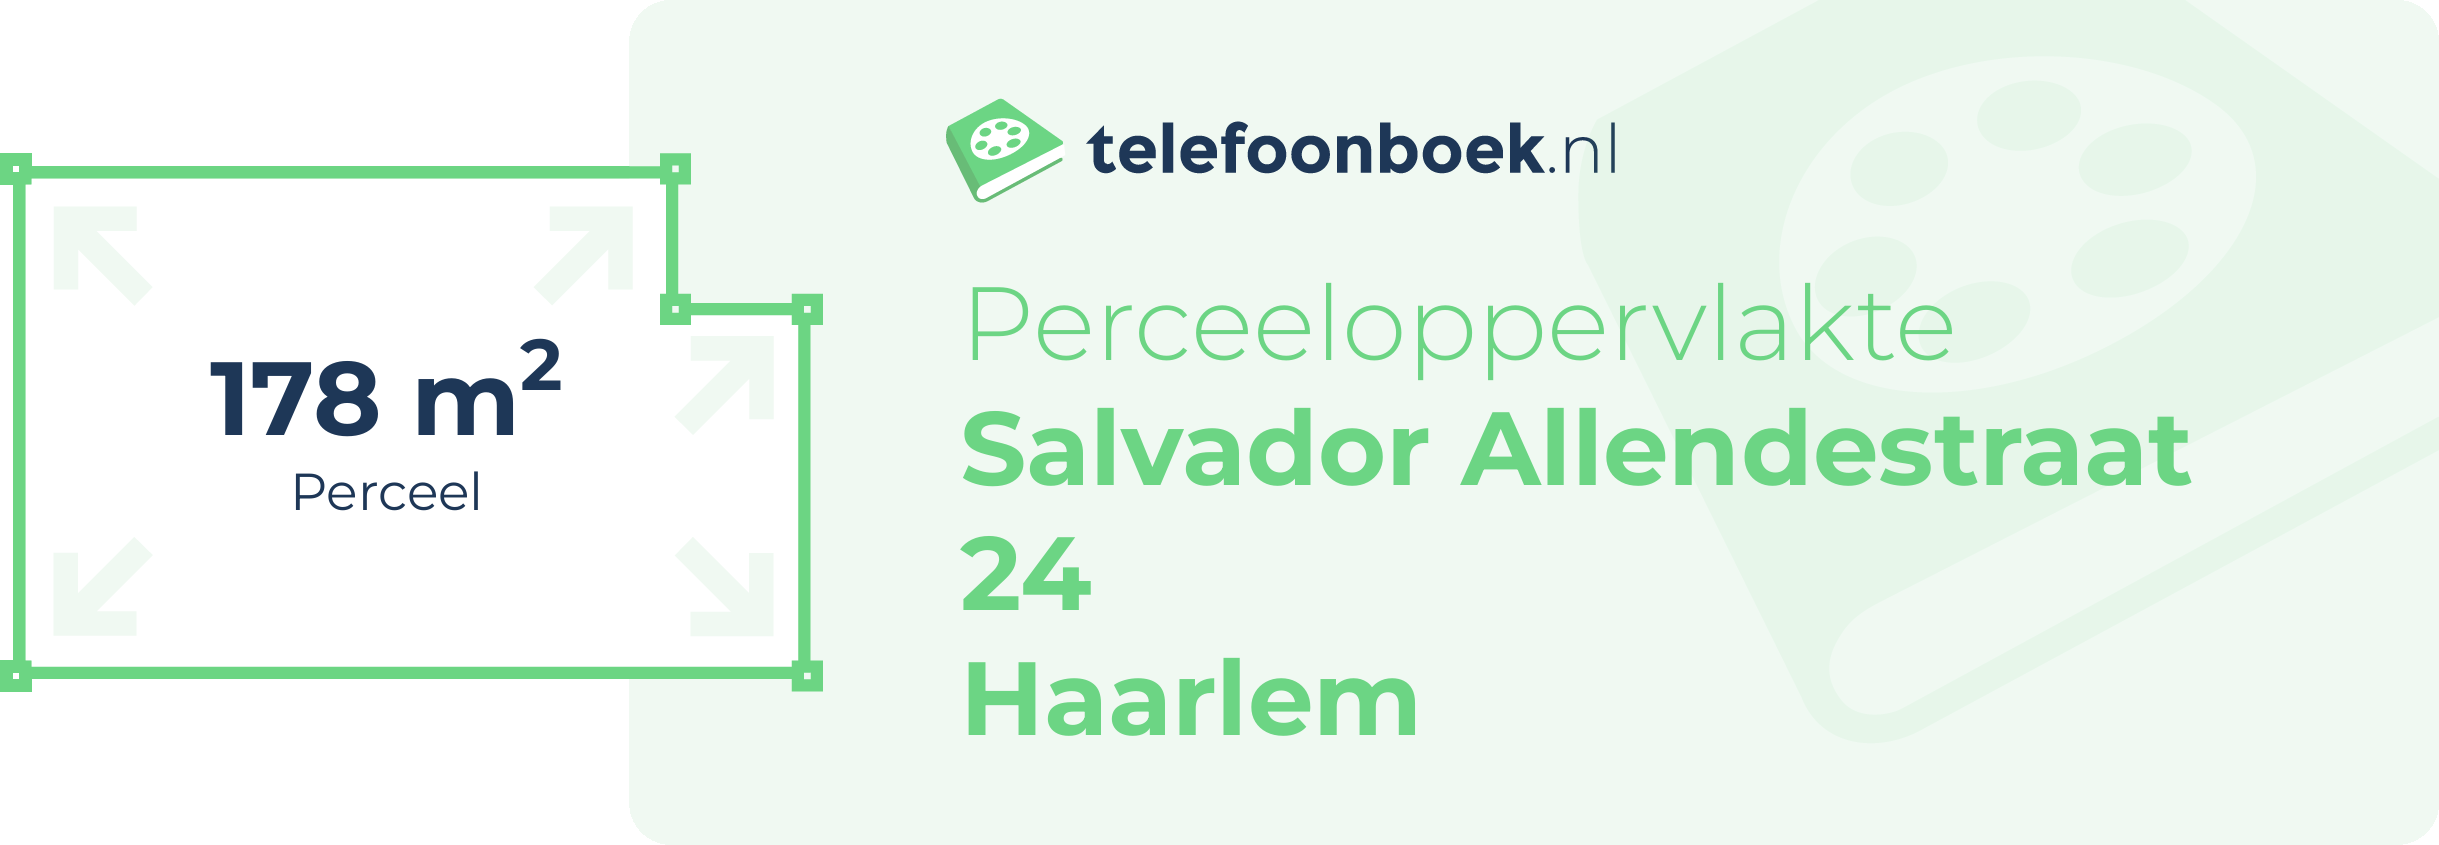 Perceeloppervlakte Salvador Allendestraat 24 Haarlem